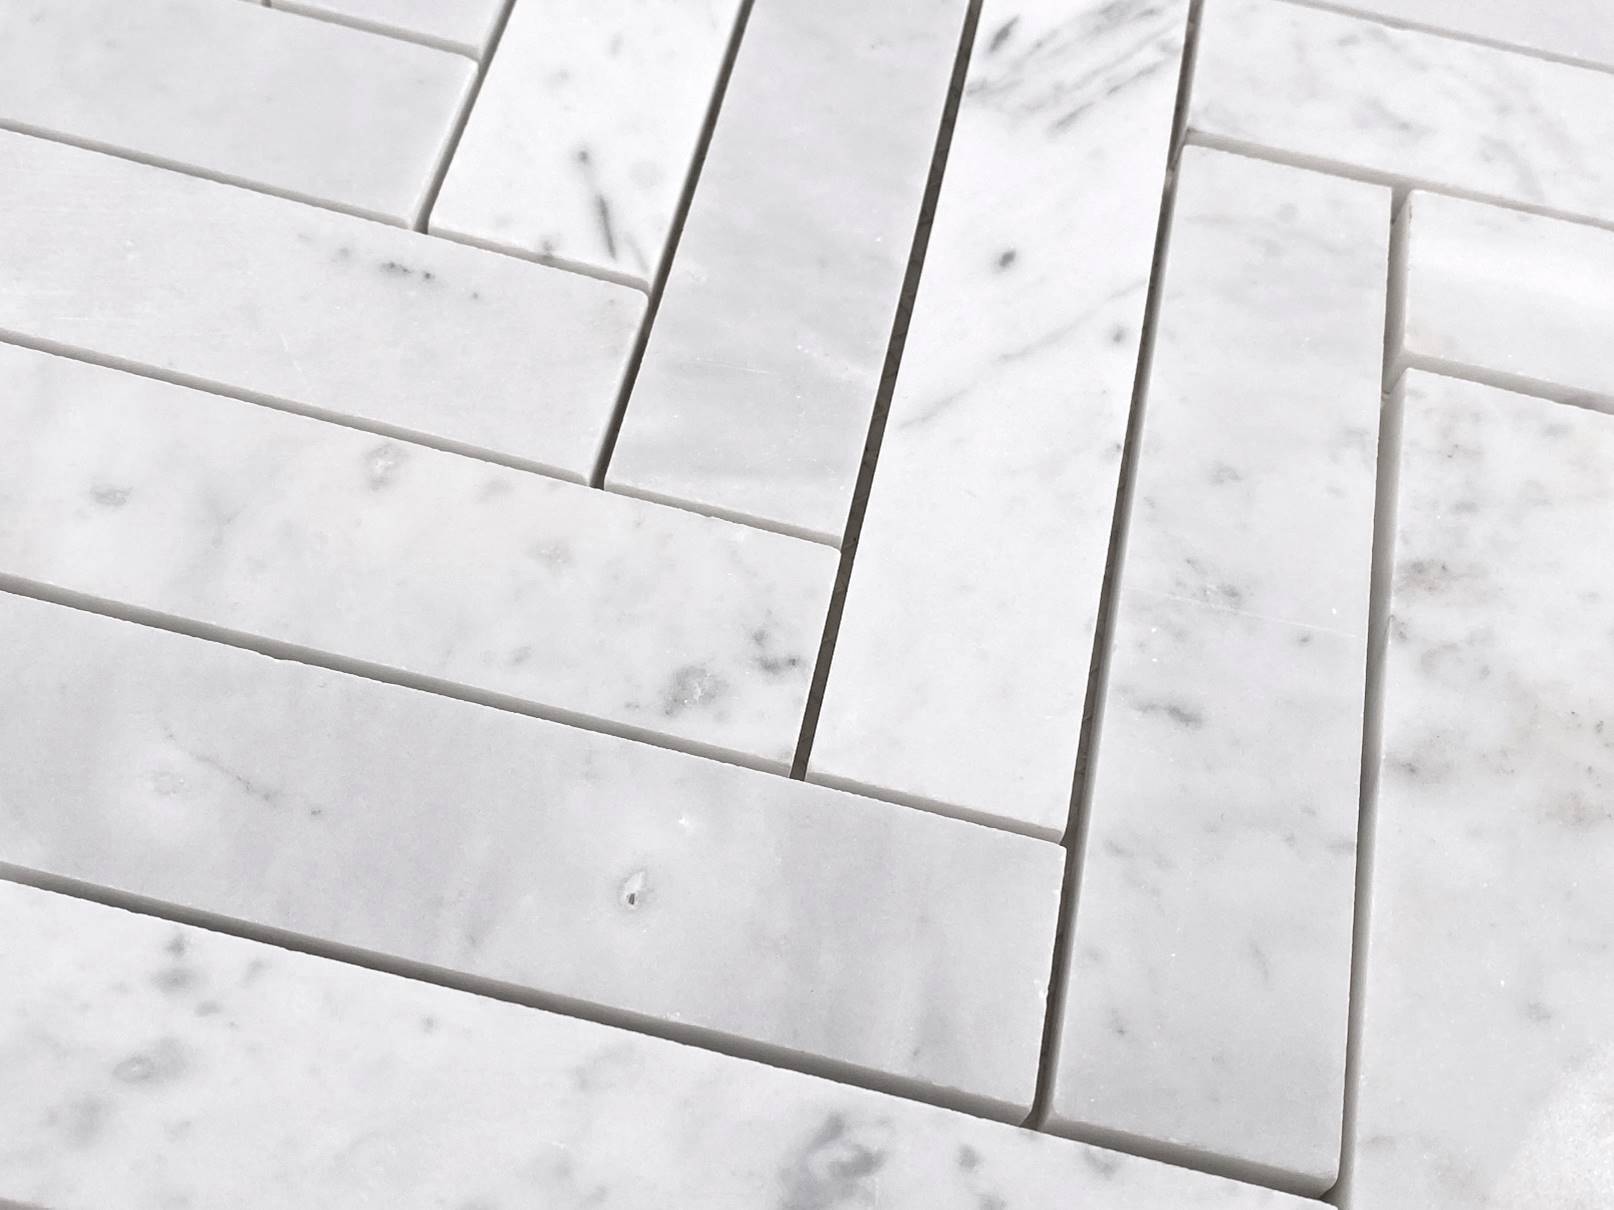 Carrara Marble 1x6 Long Herringbone Mosaic Tile Polished for Kitchen Backsplash Wall Bathroom Flooring Shower